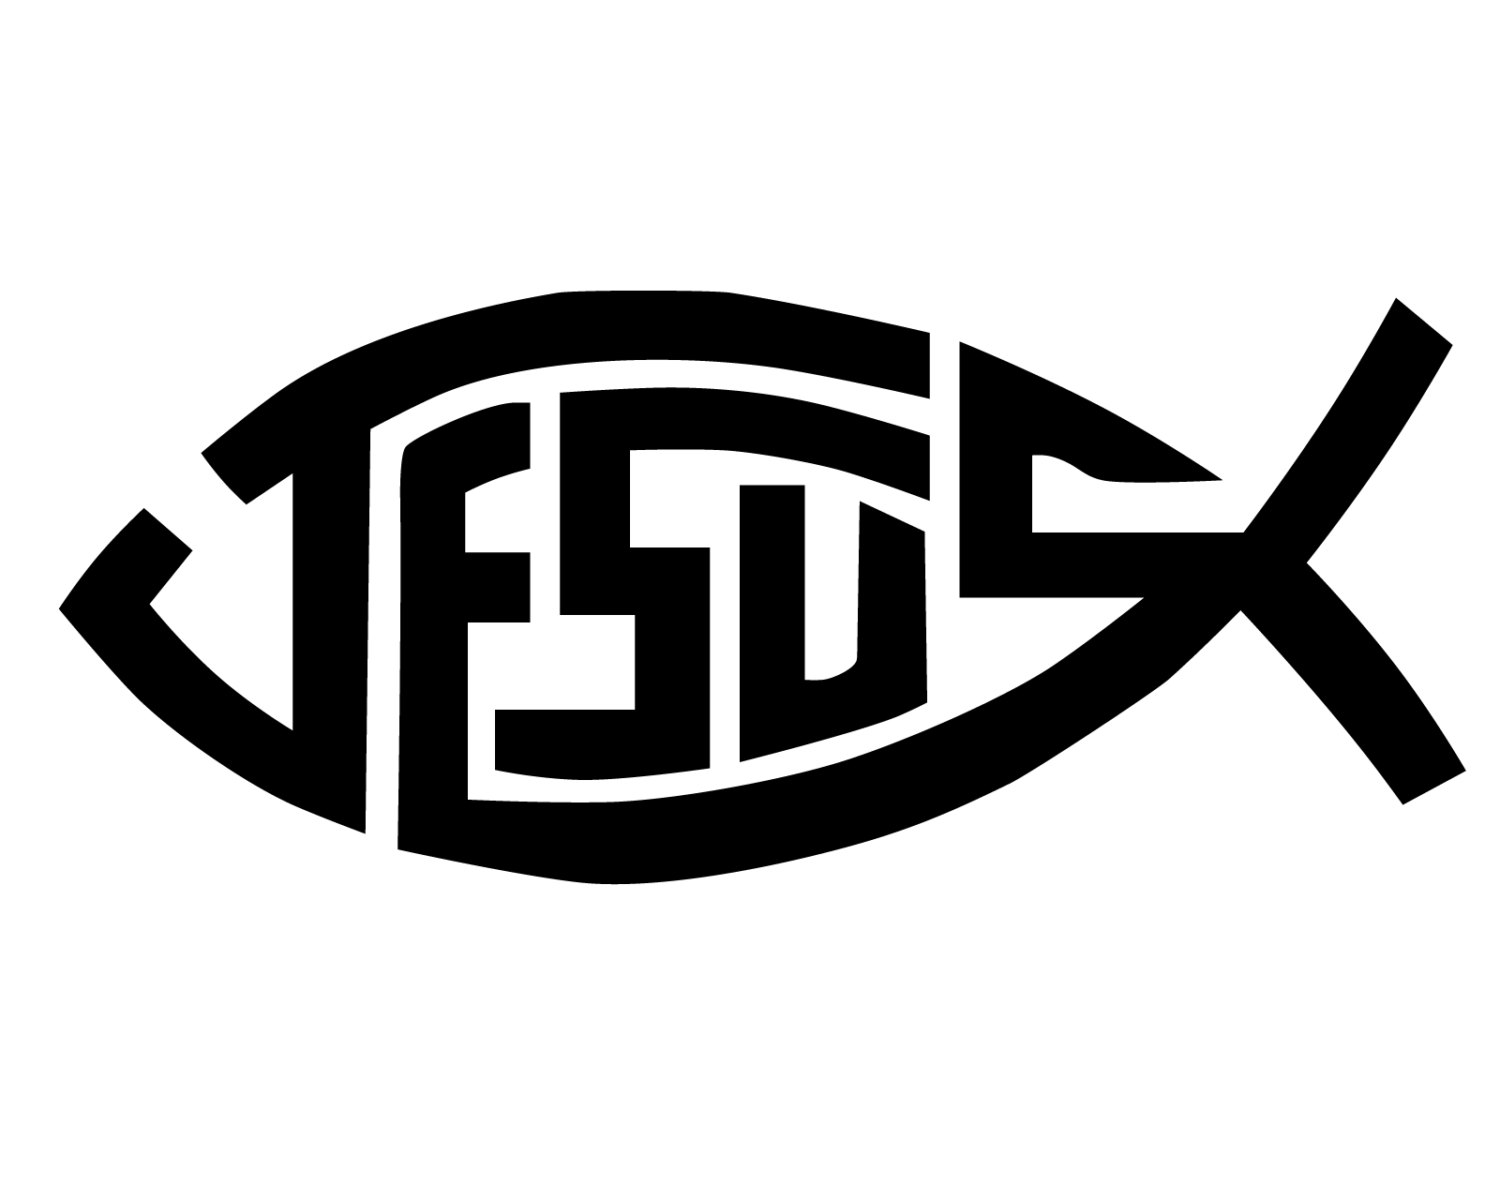 christian fish symbol clipart